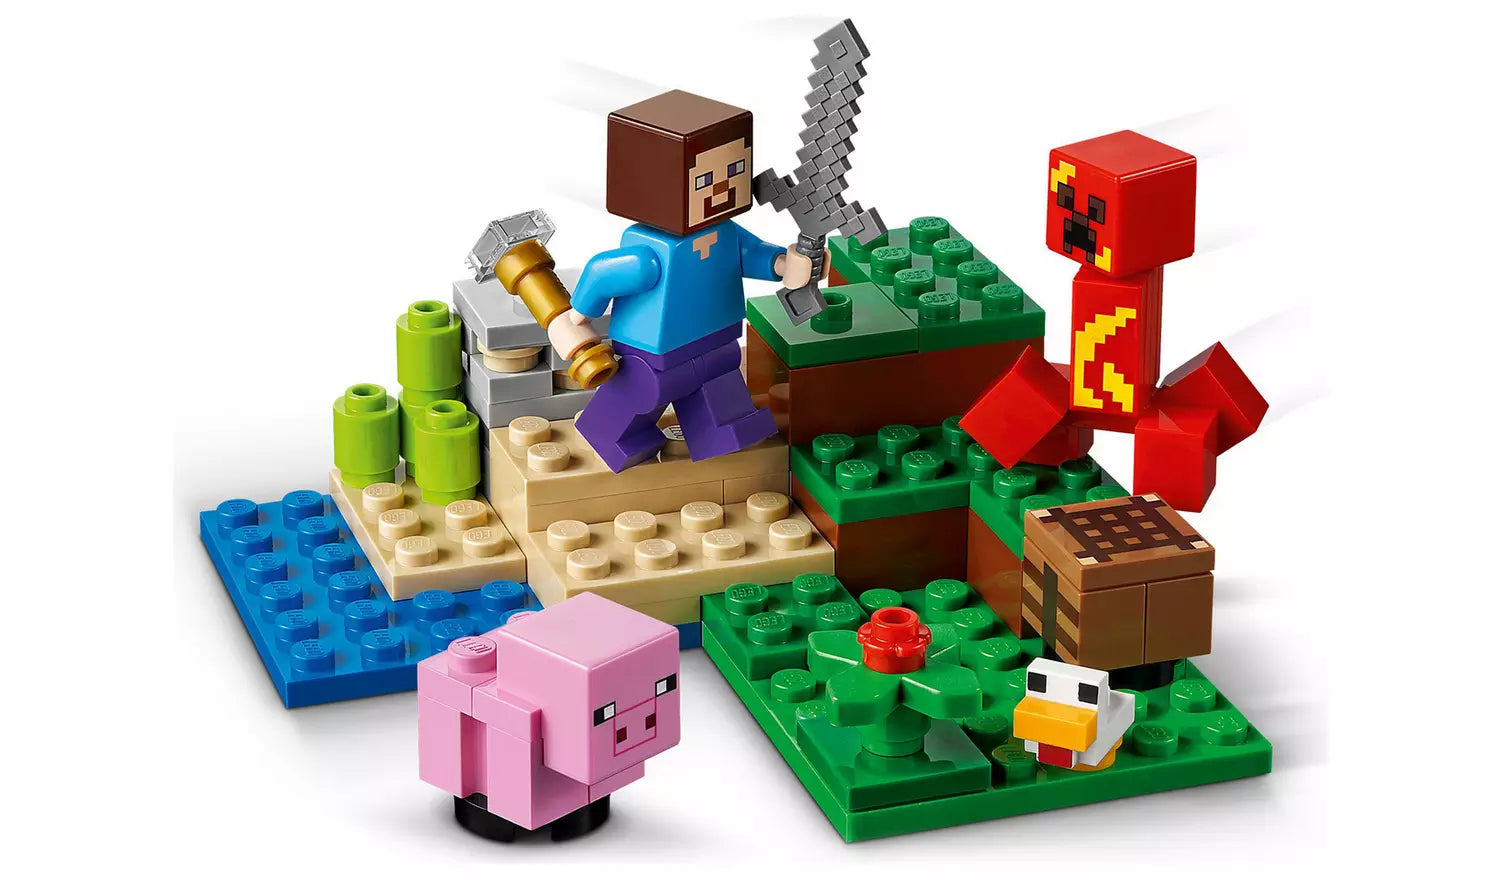 LEGO Minecraft The Creeper Ambush with Pig Figures Set-6538